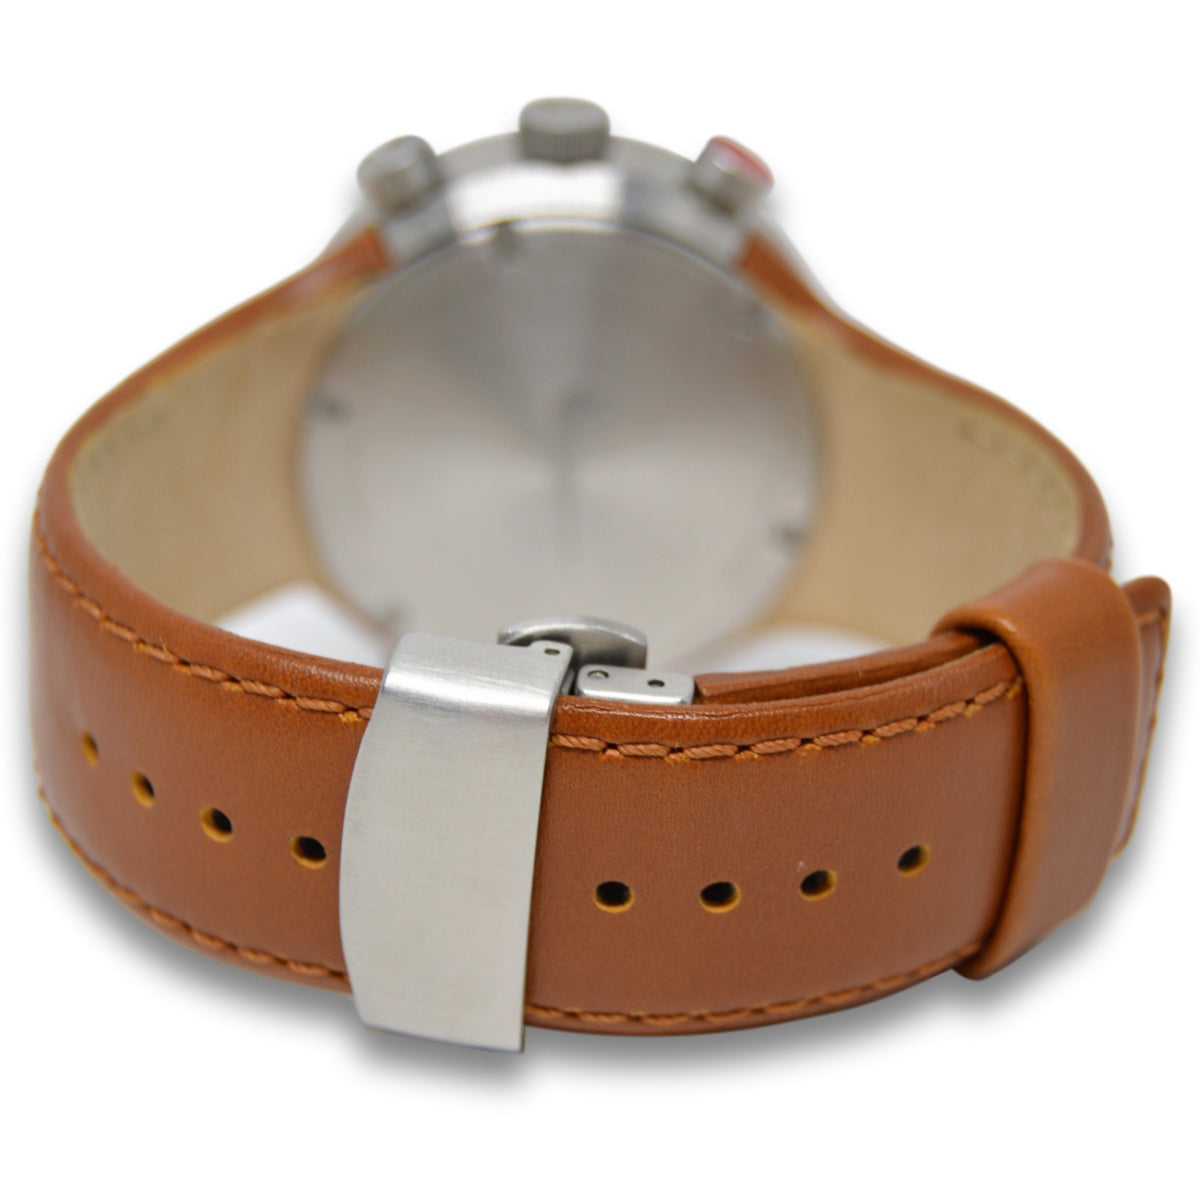 Nike Heritage Alarm Chrono Tan Leather Watch WC0054-251 | Rare Find | - Elevn:59